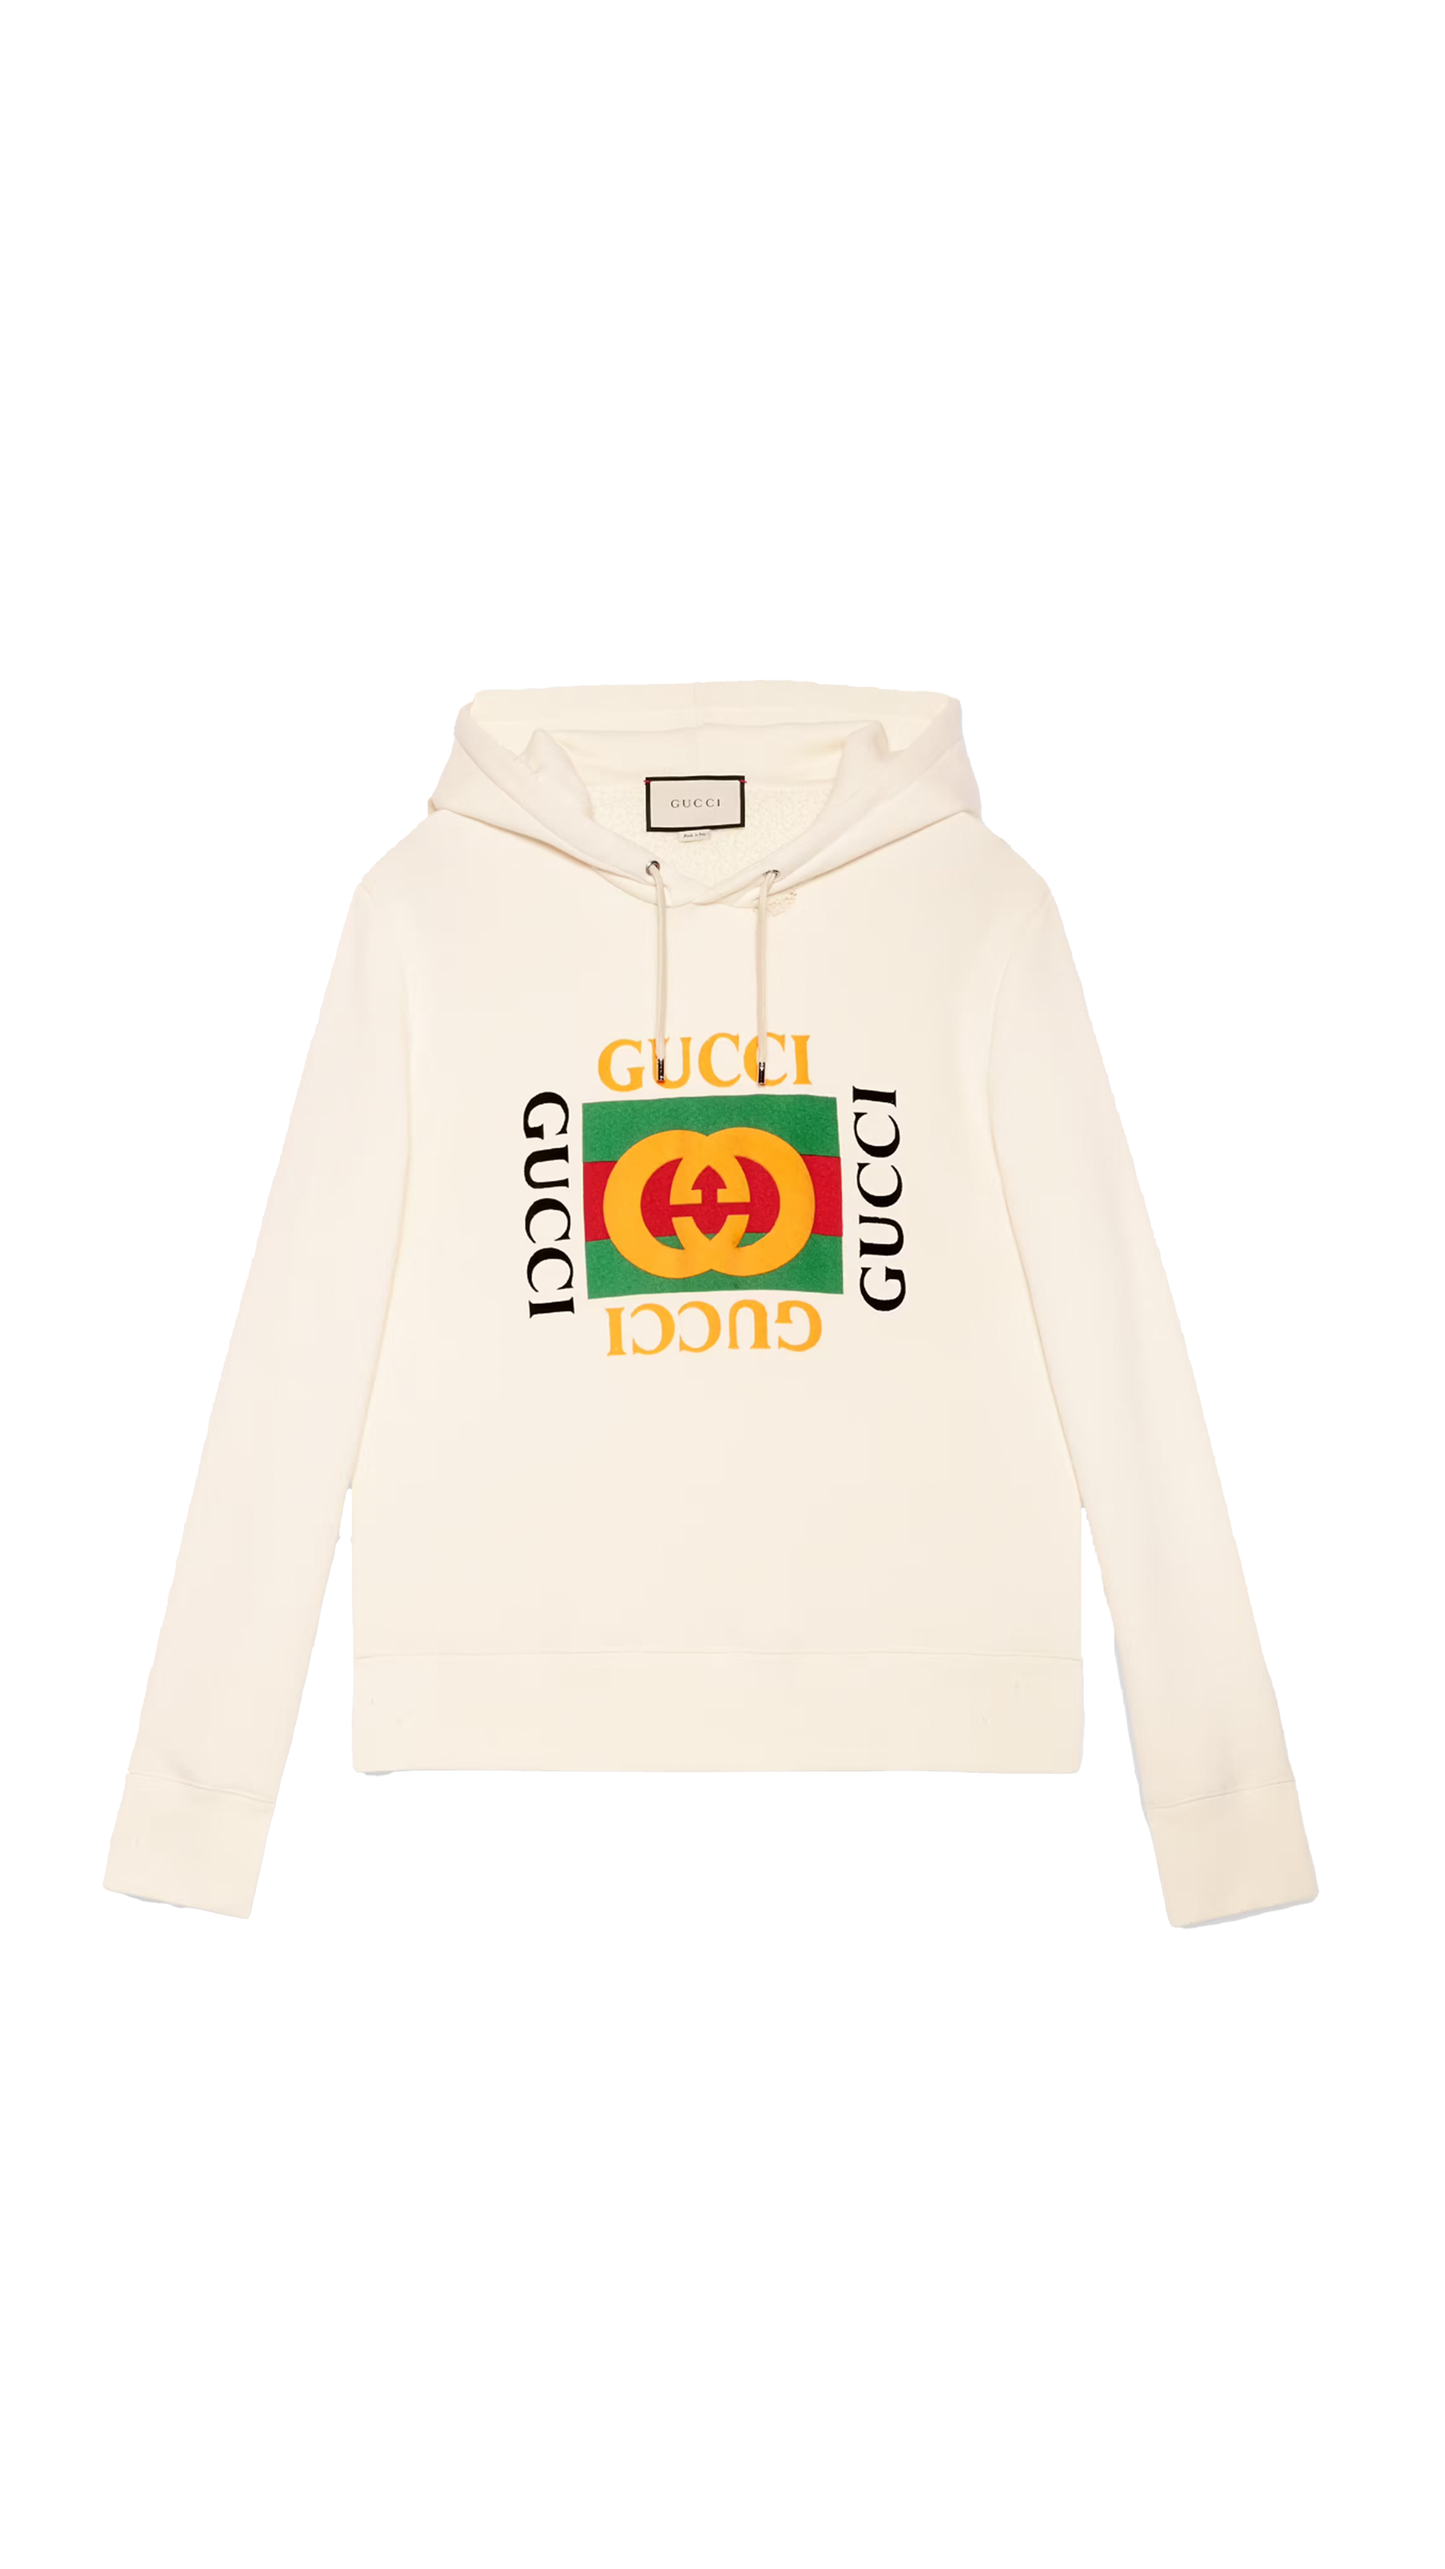 Oversize Sweatshirt with Gucci Logo - White